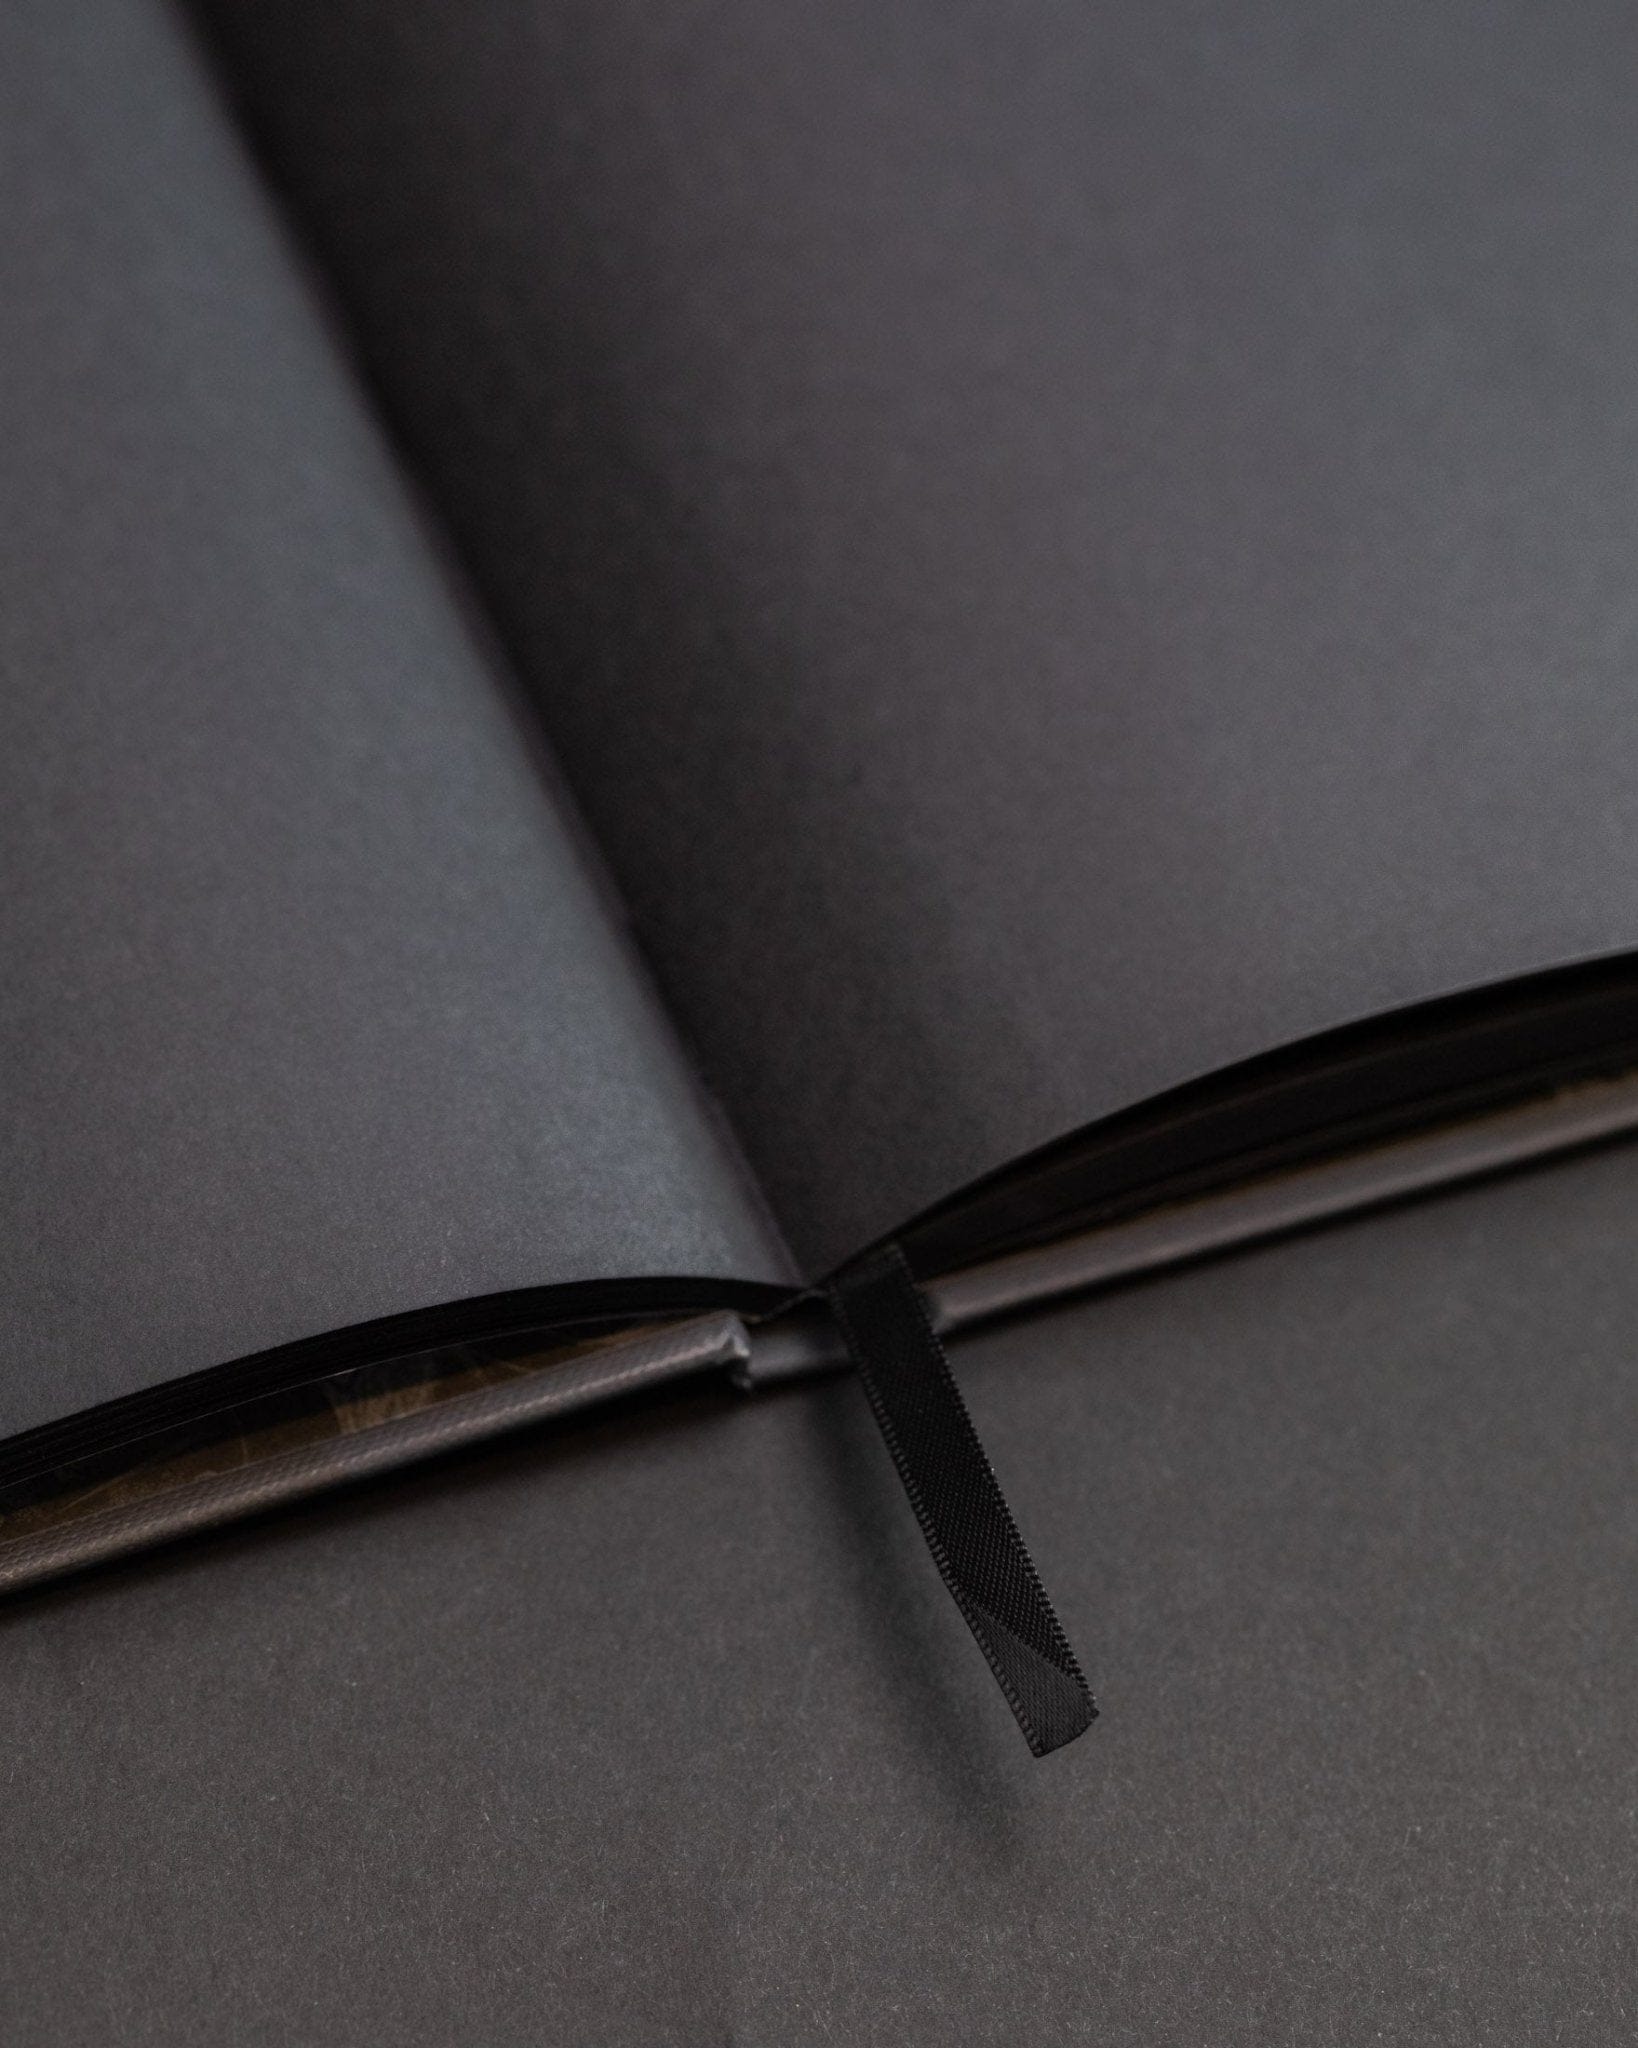 Black Paper Journal - Black Paper Notebooks